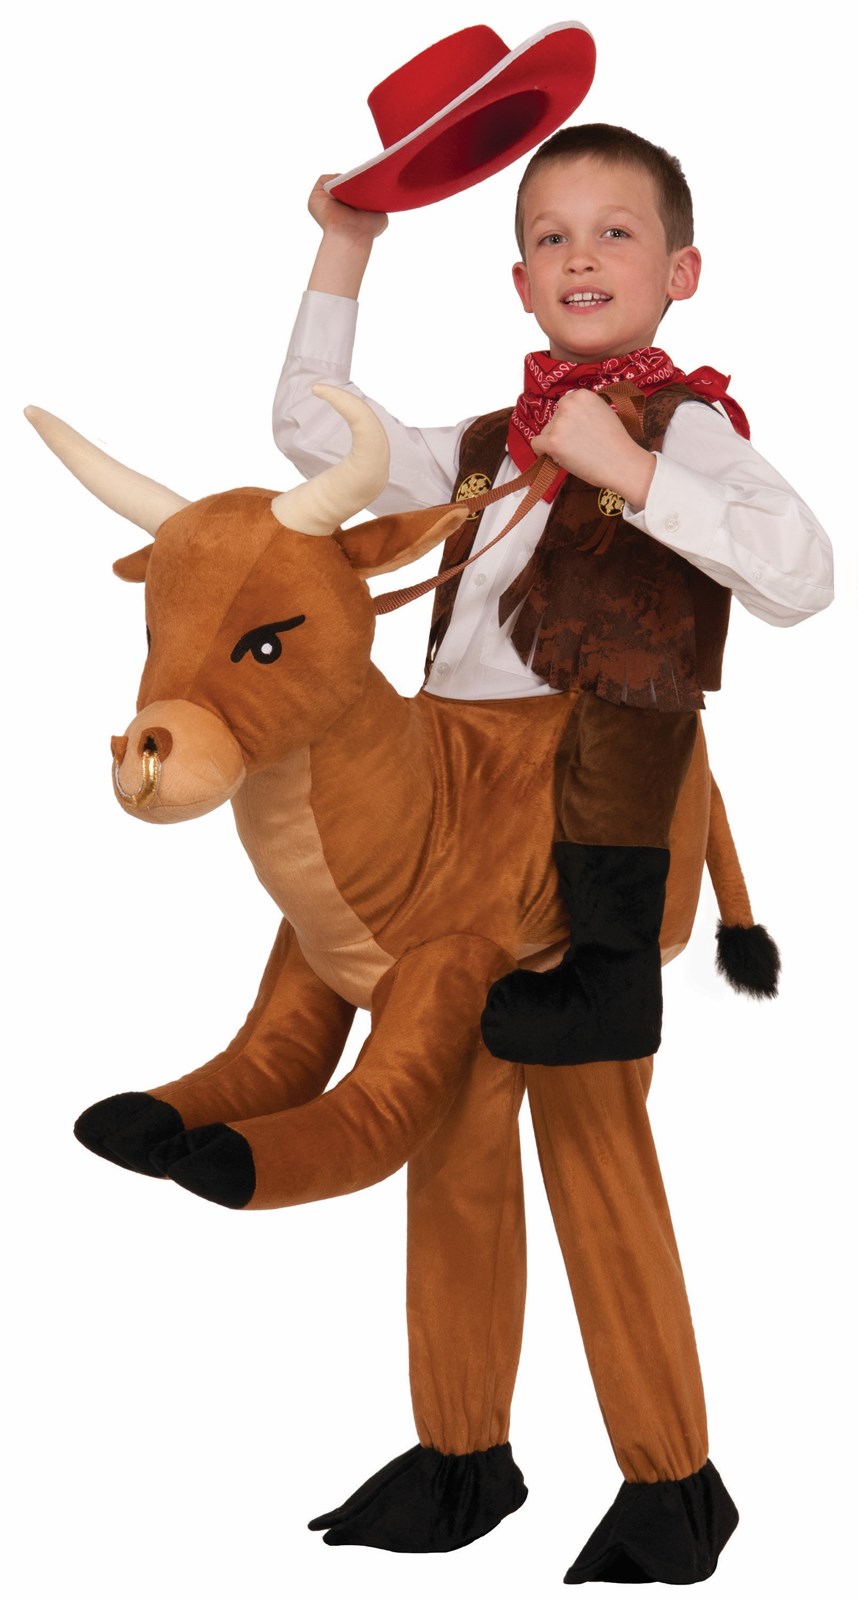 Ride on a Bull Costume for Children